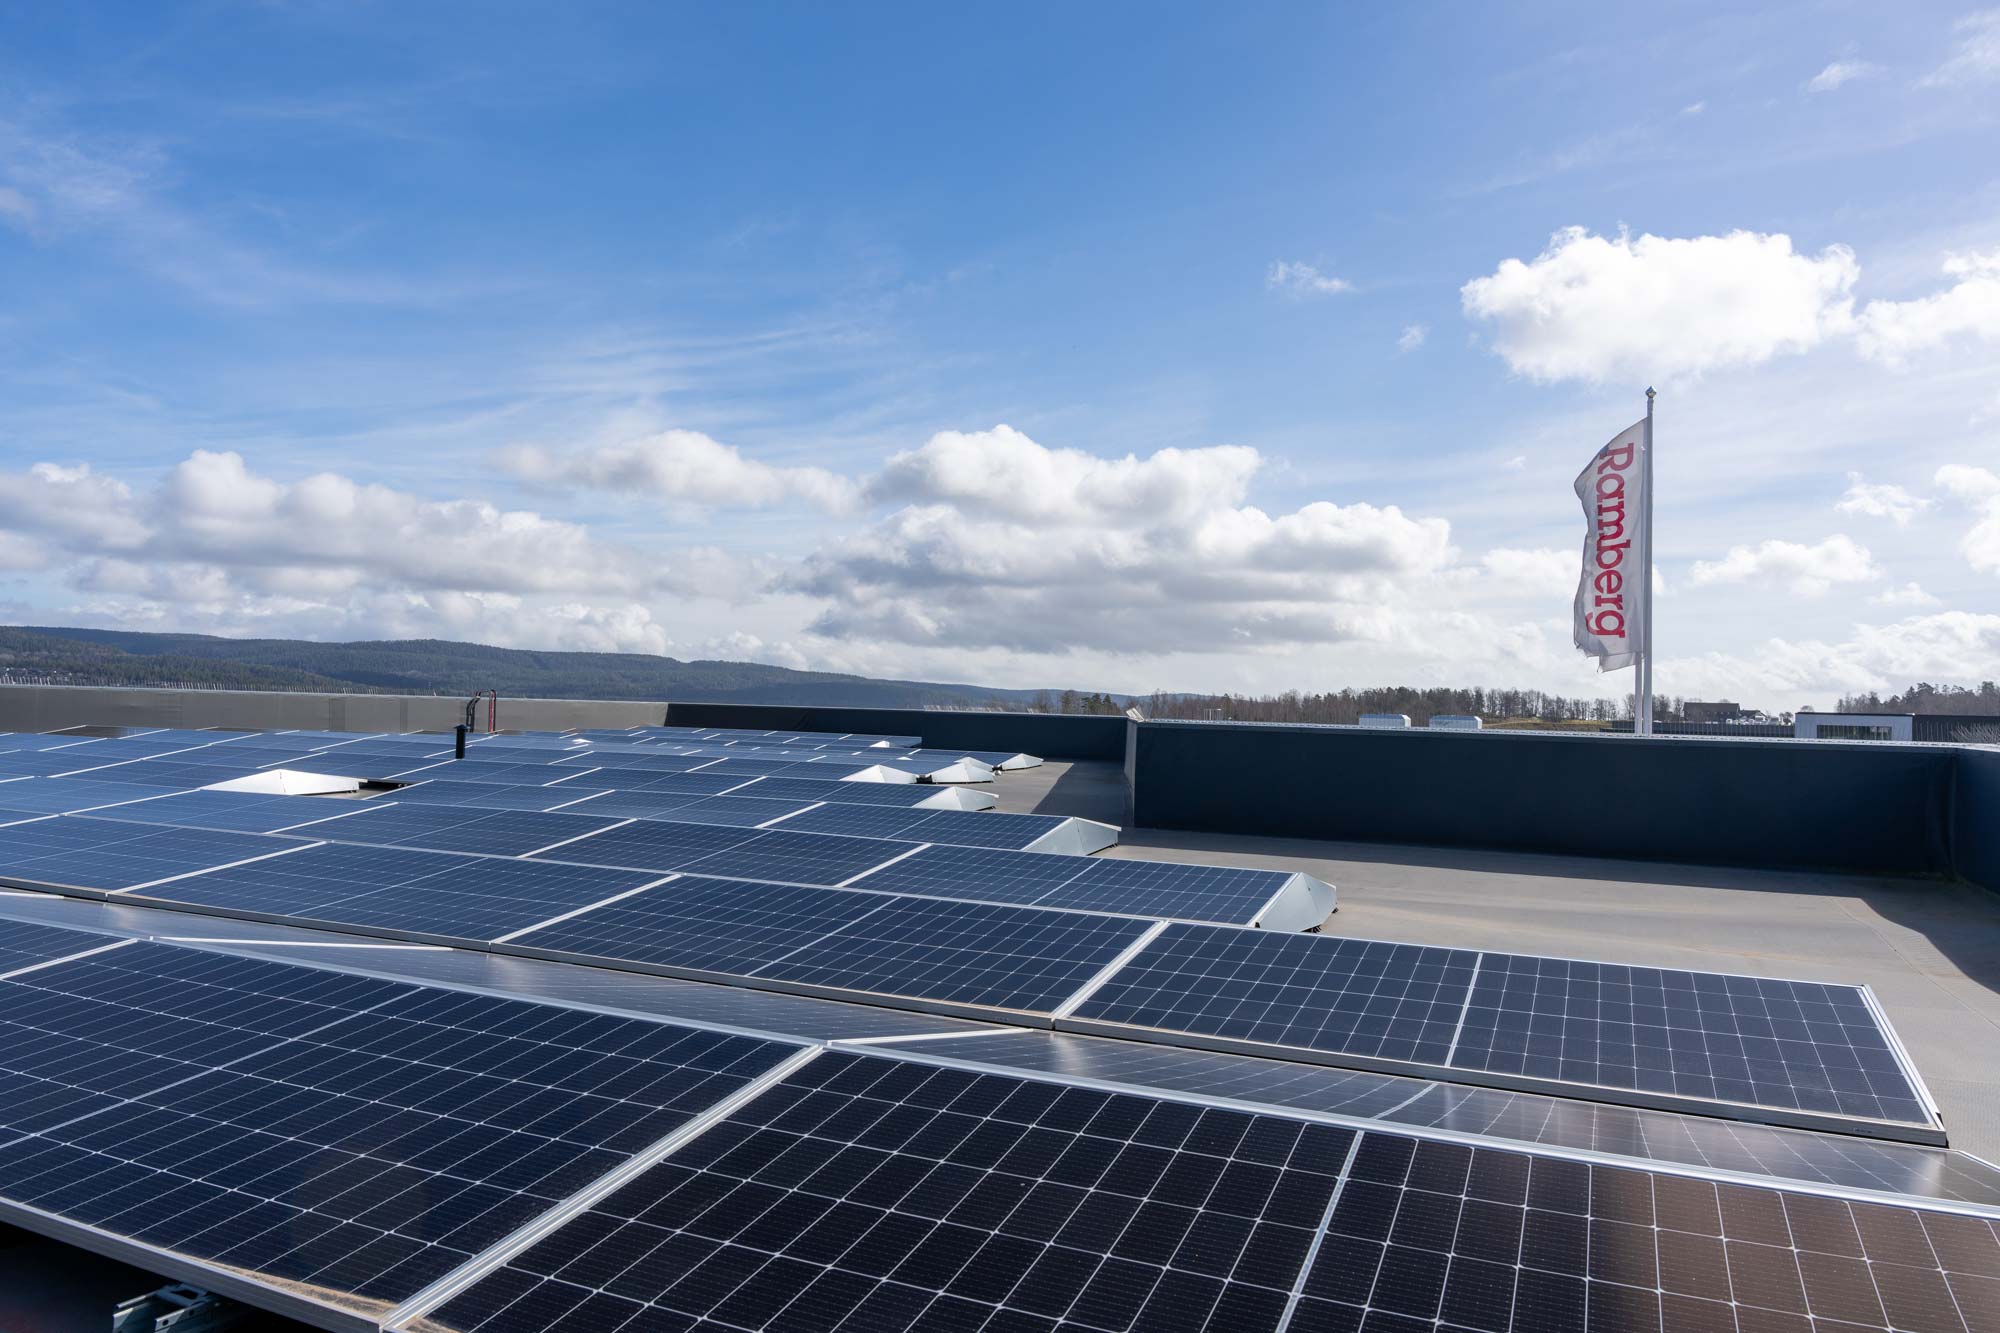 Bilde fra Sandes terminal på taket, hvor man ser solcelle anlegget og blå himmel